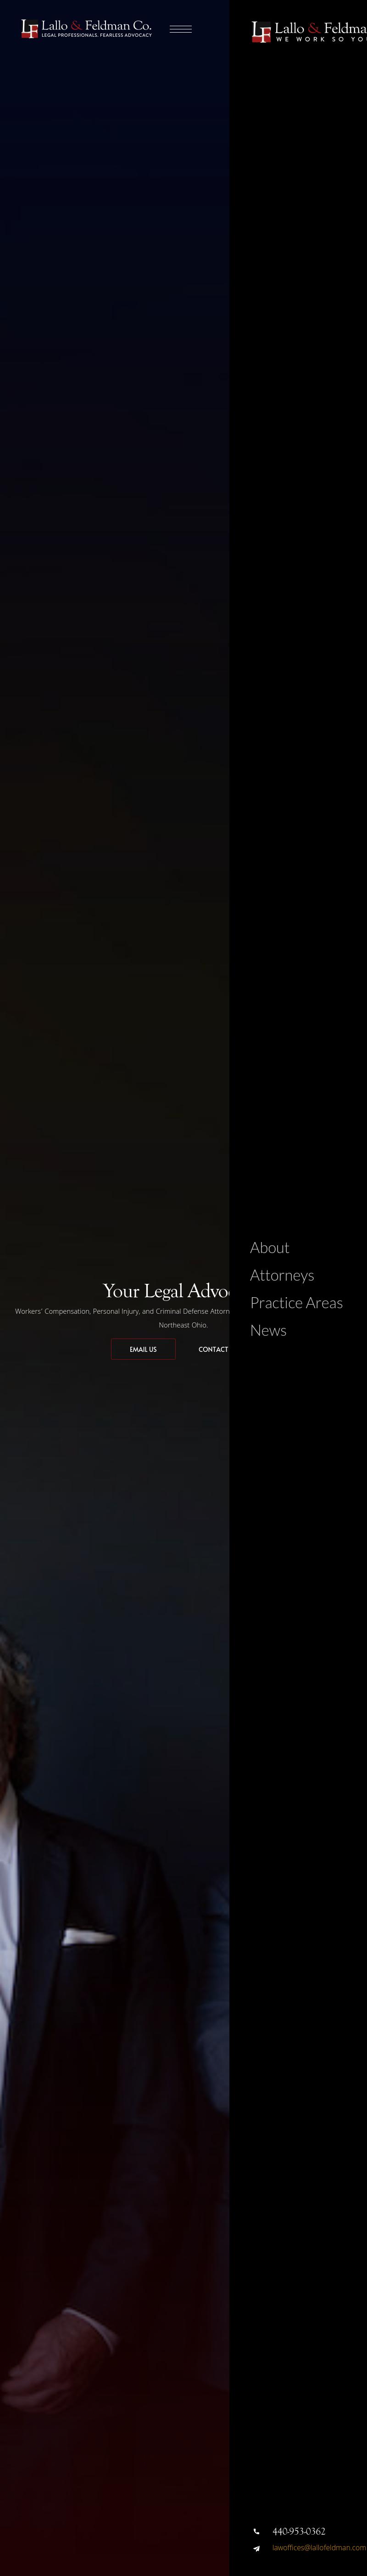 Lallo & Feldman Co., LPA - Willoughby OH Lawyers